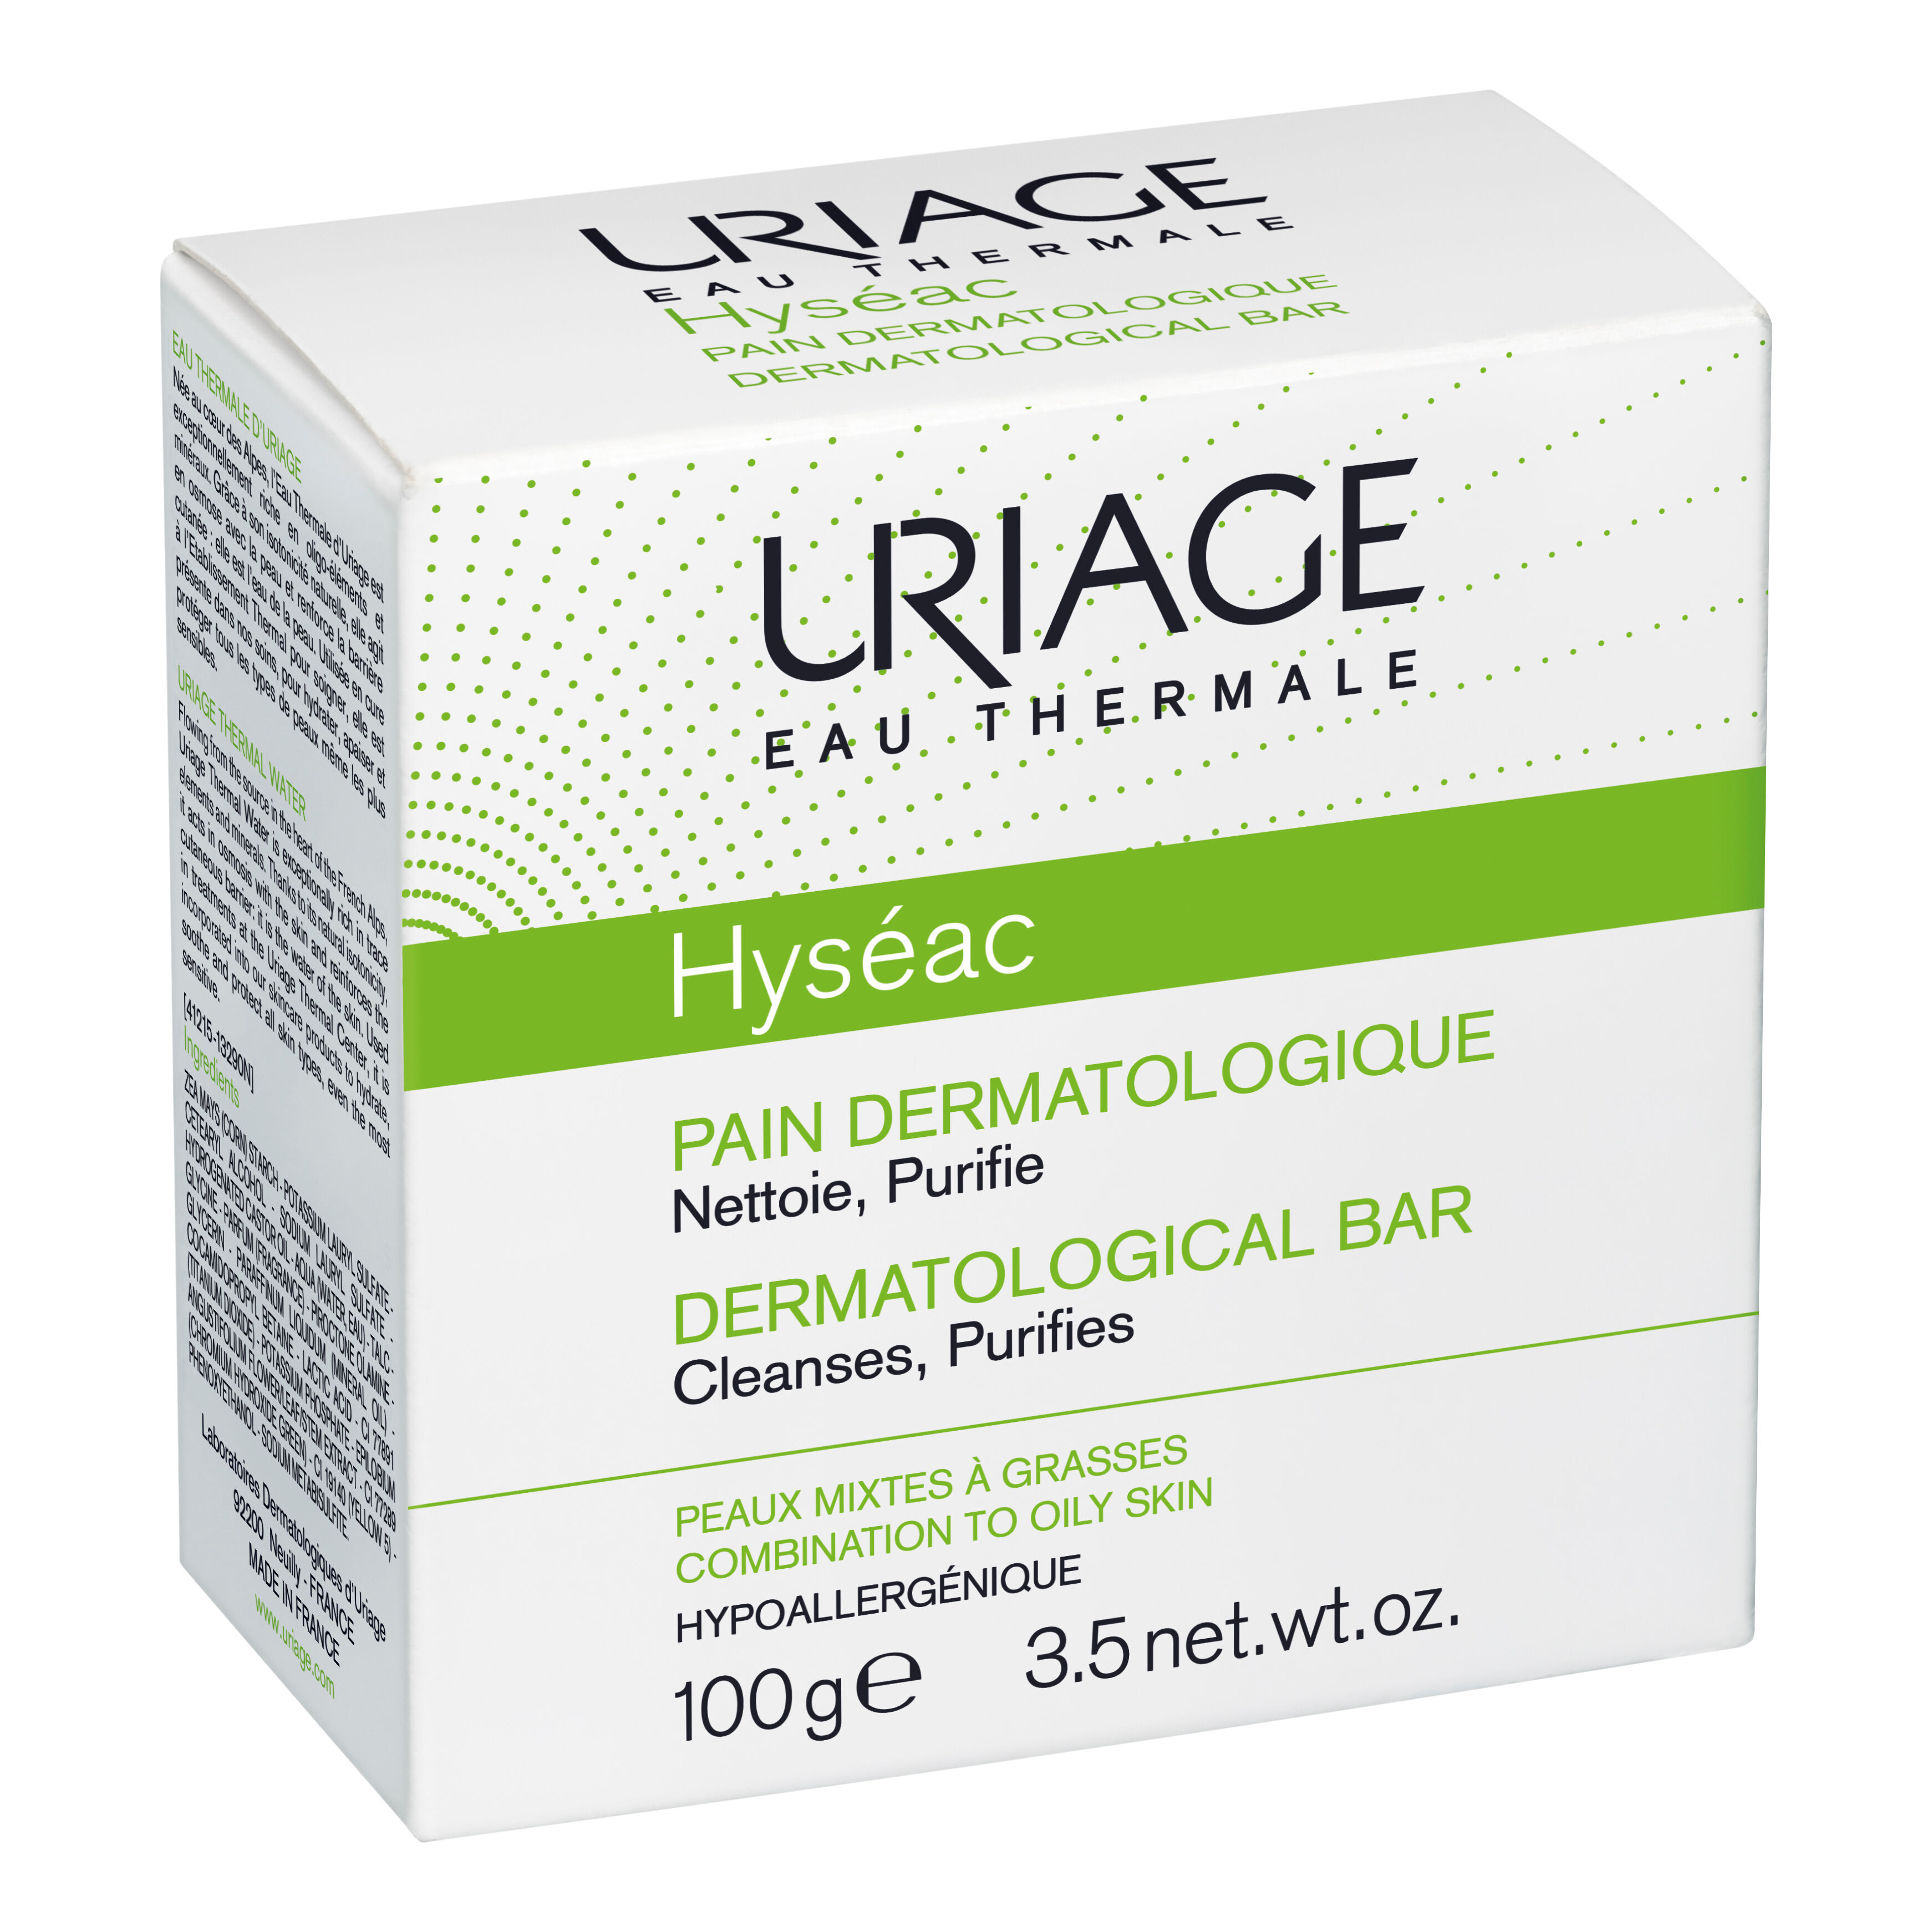 Uriage Hyseac Pane Dermat.100g